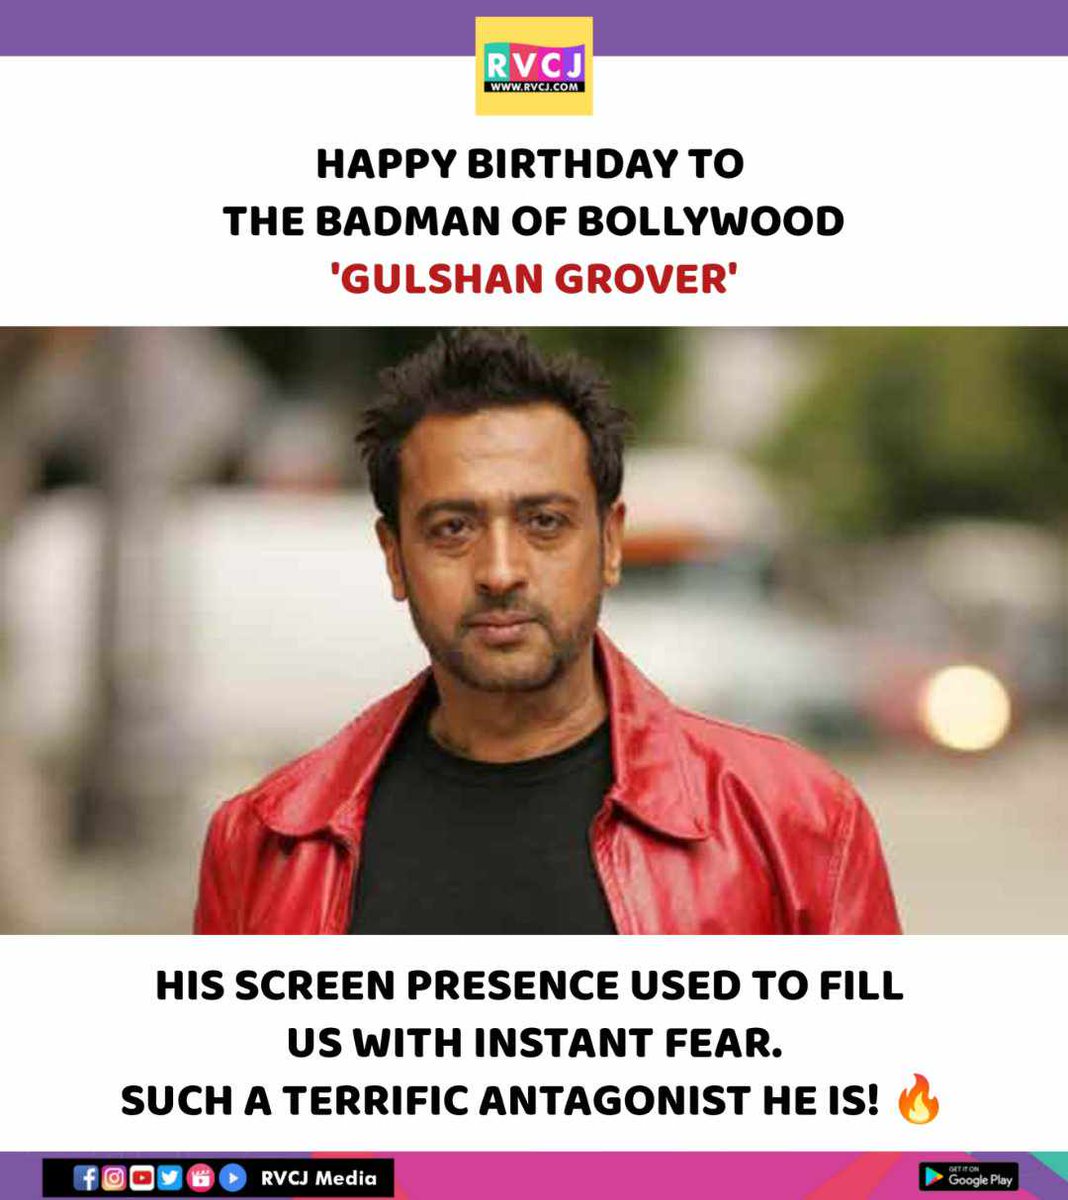 Happy Birthday Gulshan Grover!

#gulshangrover #rvcjmovies #rvcjinsta @GulshanGroverGG